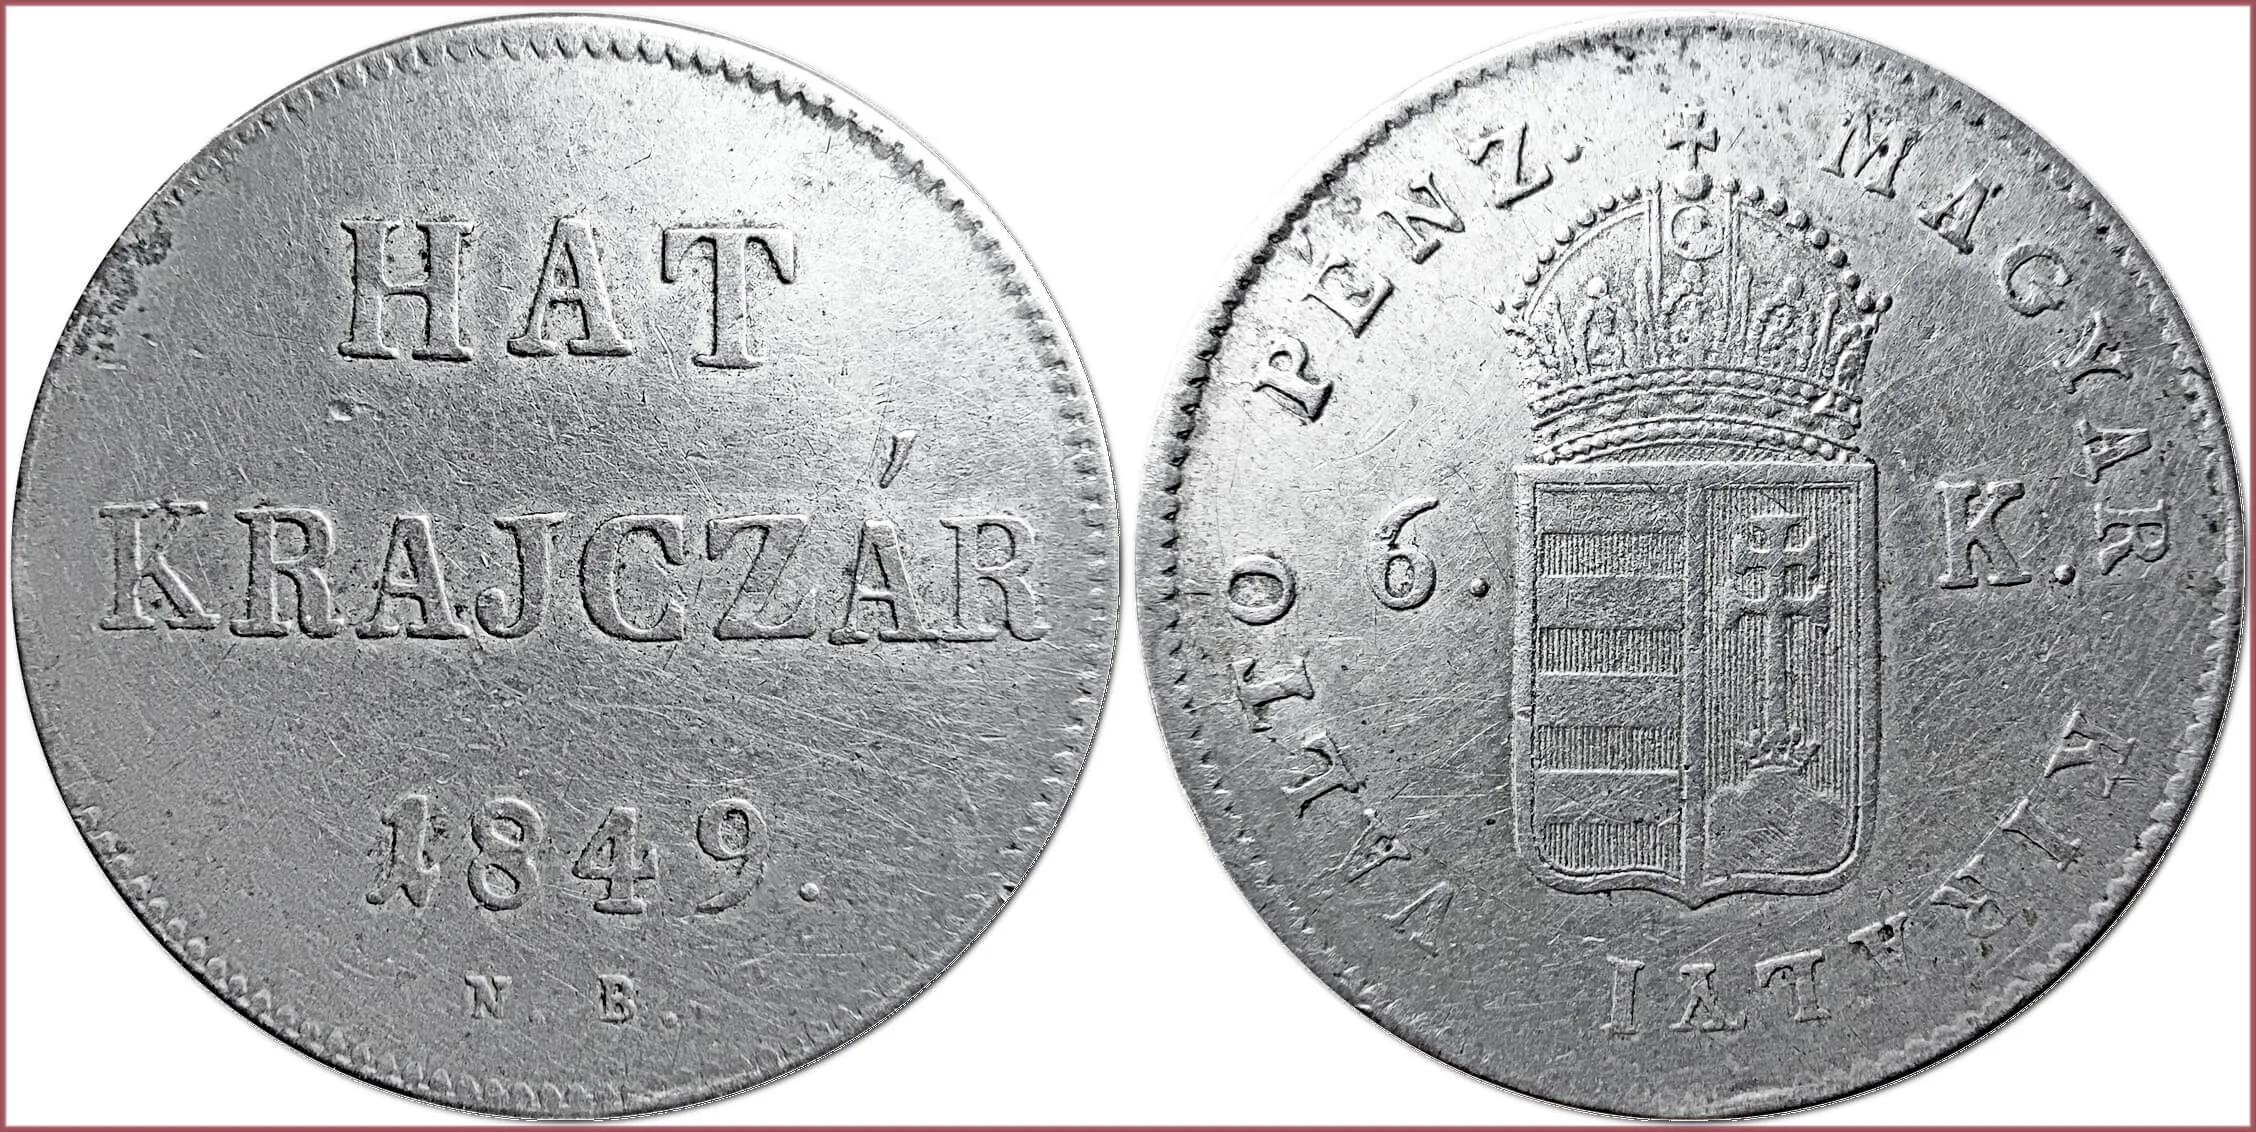 6 krajczár, 1849: Kingdom of Hungary (Hungarian Revolution of 1848-1849)